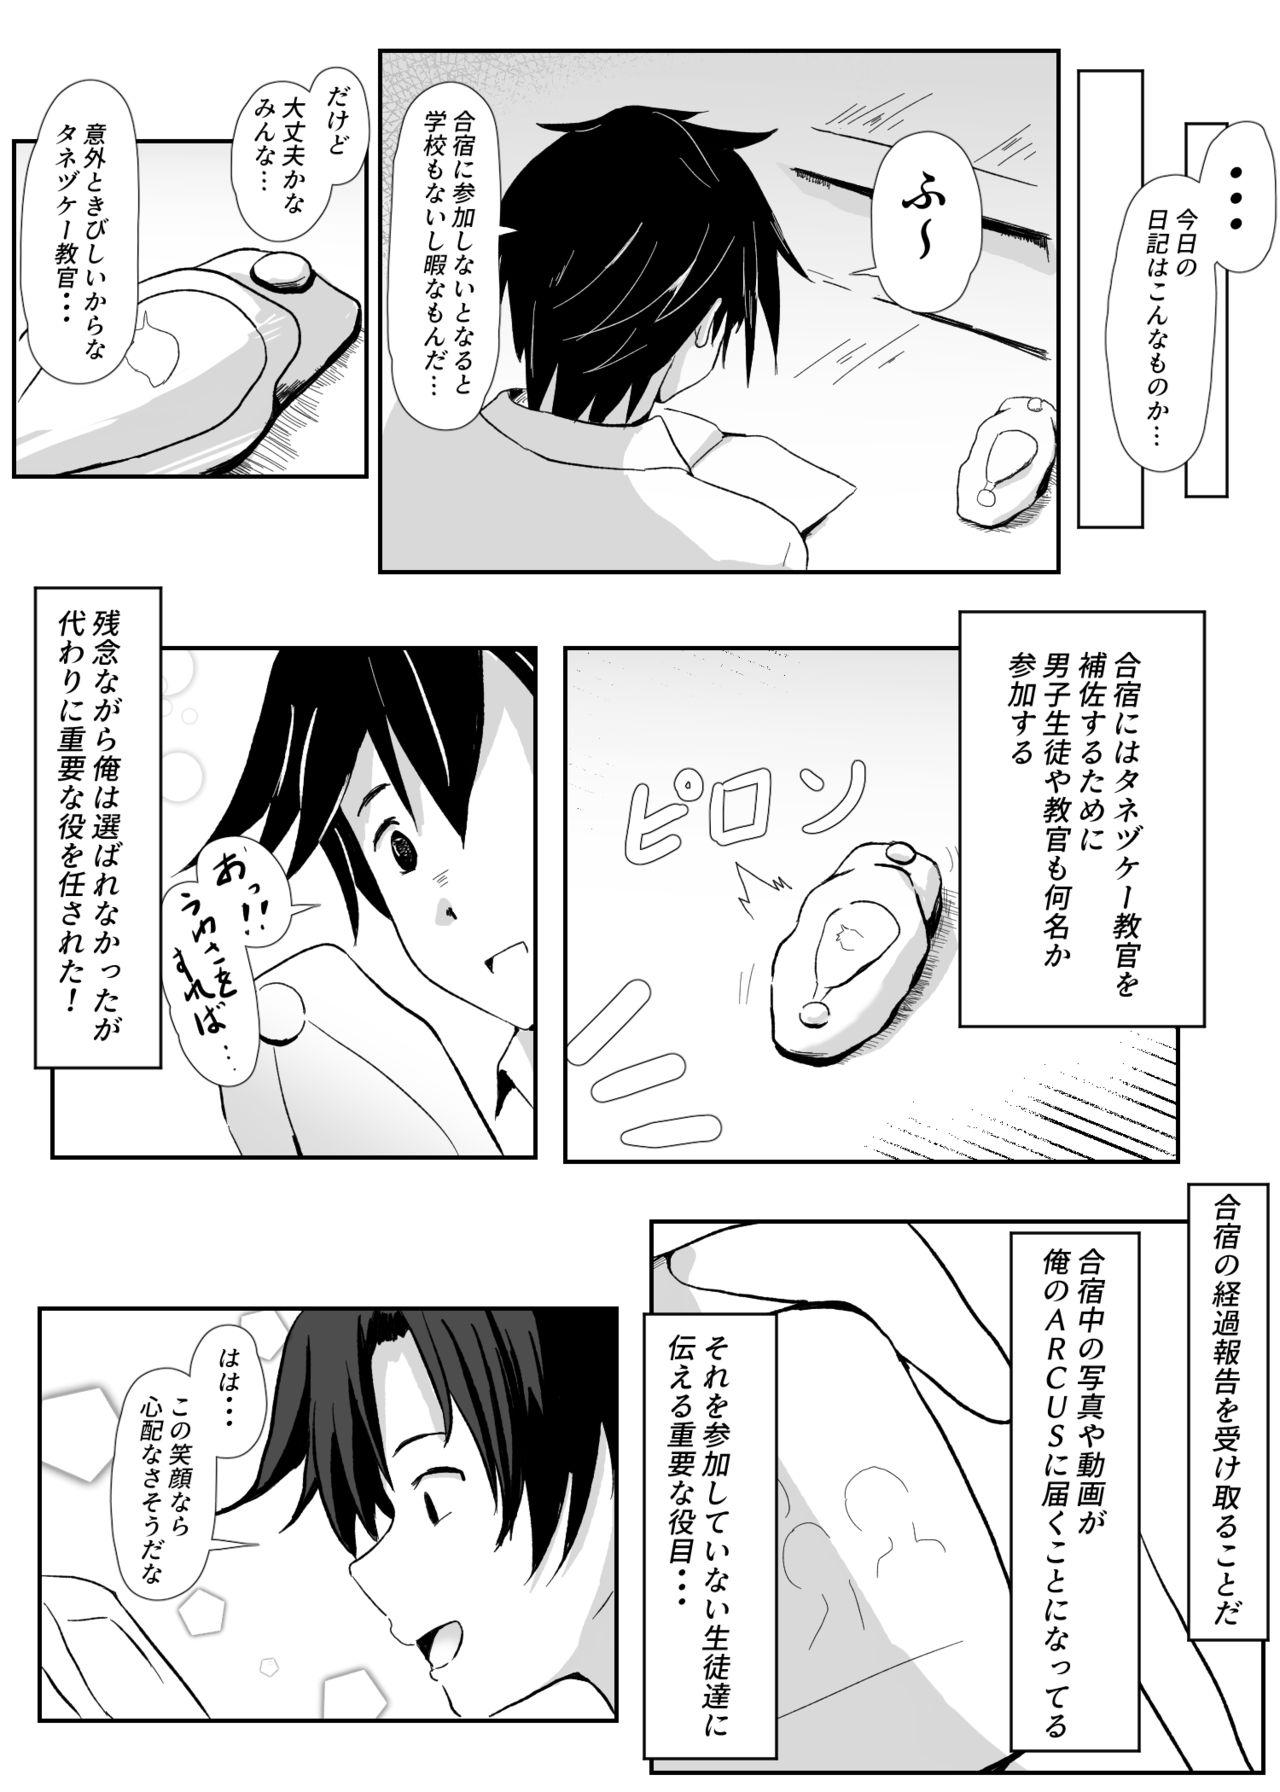 Hardcore Sex Sen no Kiseki - The legend of heroes | eiyuu densetsu Lesbians - Page 8